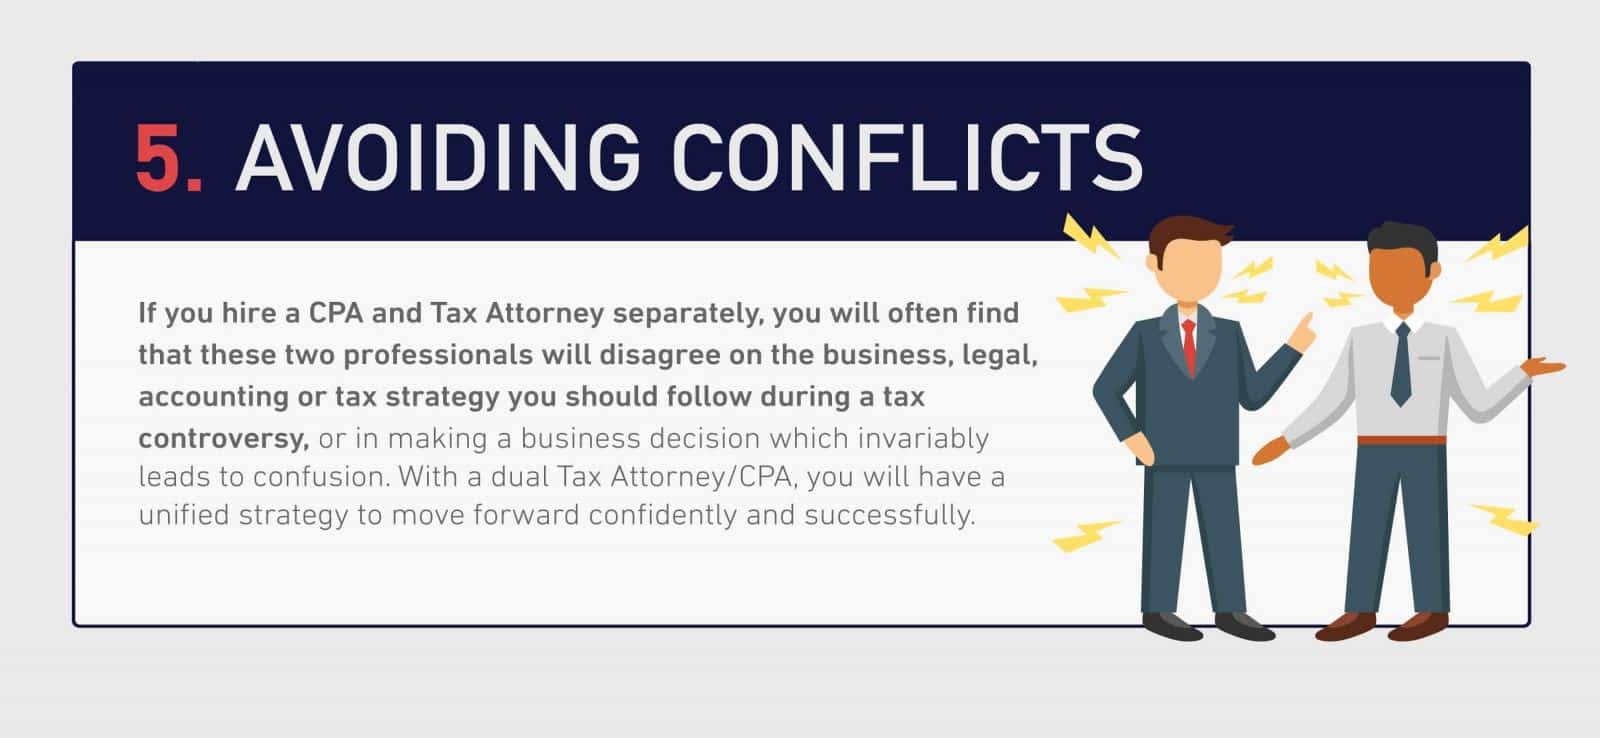 Avoiding-conflicts-klasing-associates-san-diego-tax-attorney